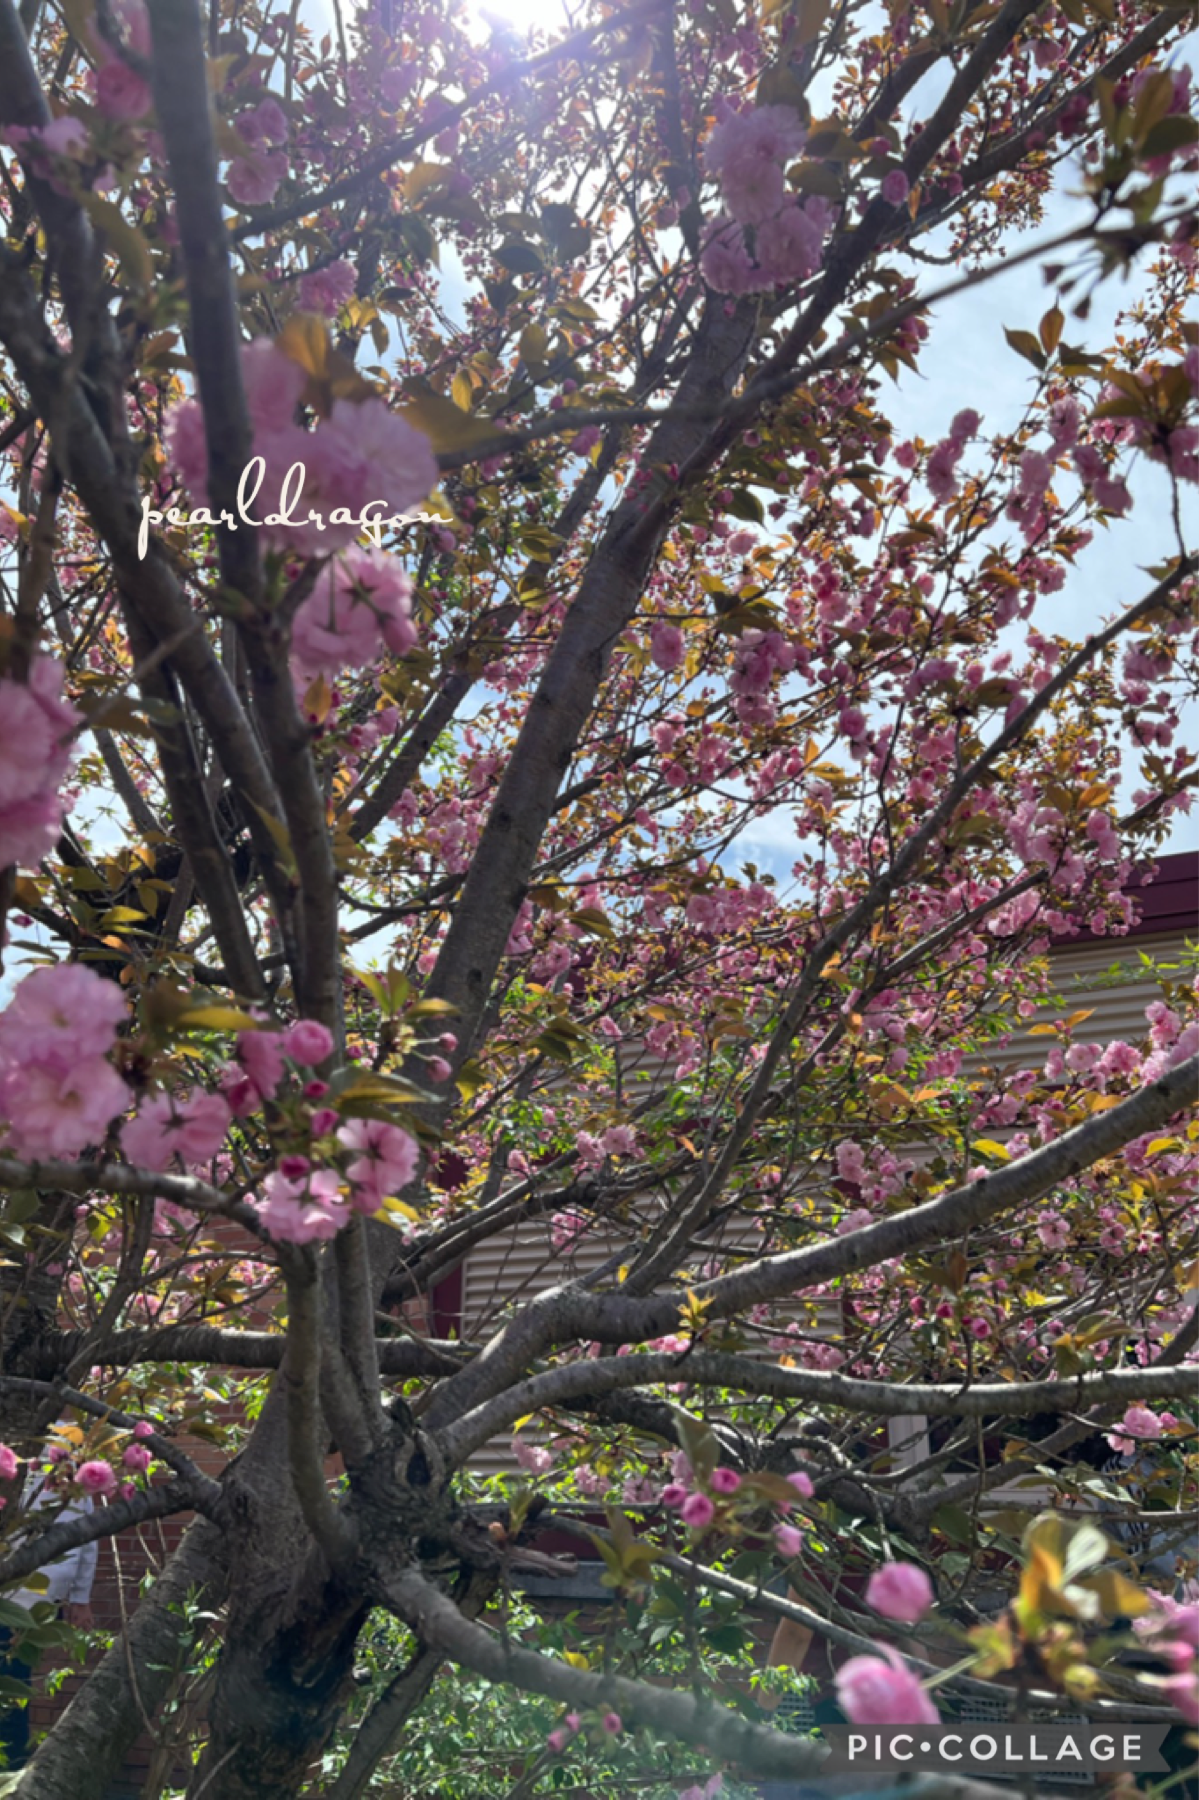 🌸tap🌸
I love cherry blossoms :D